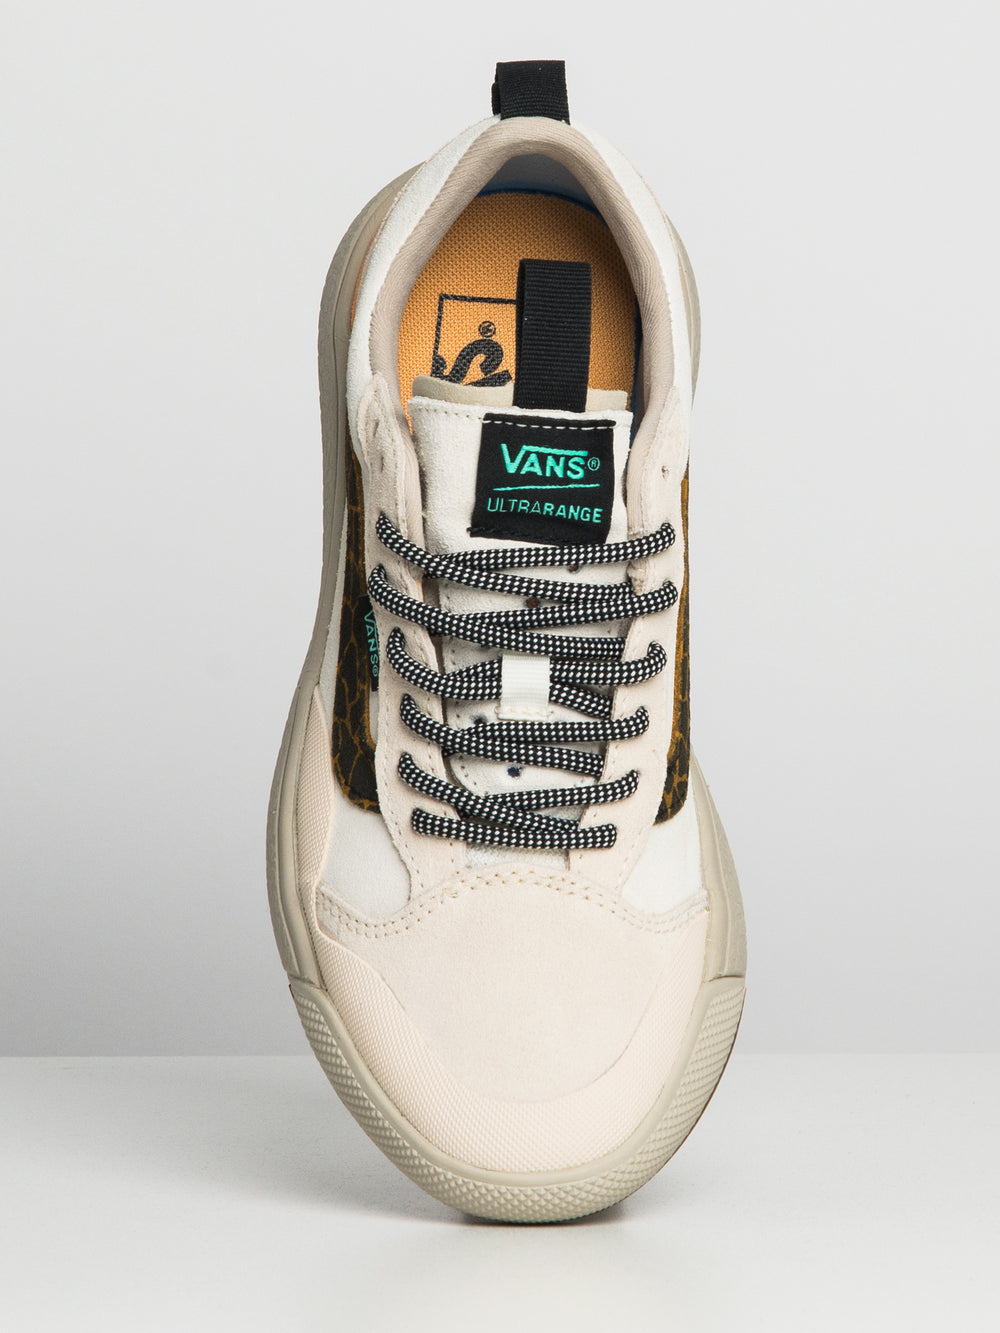 New Vans Old Skool Cordura Sneakers Low-Top Shoes ( Size 11.5